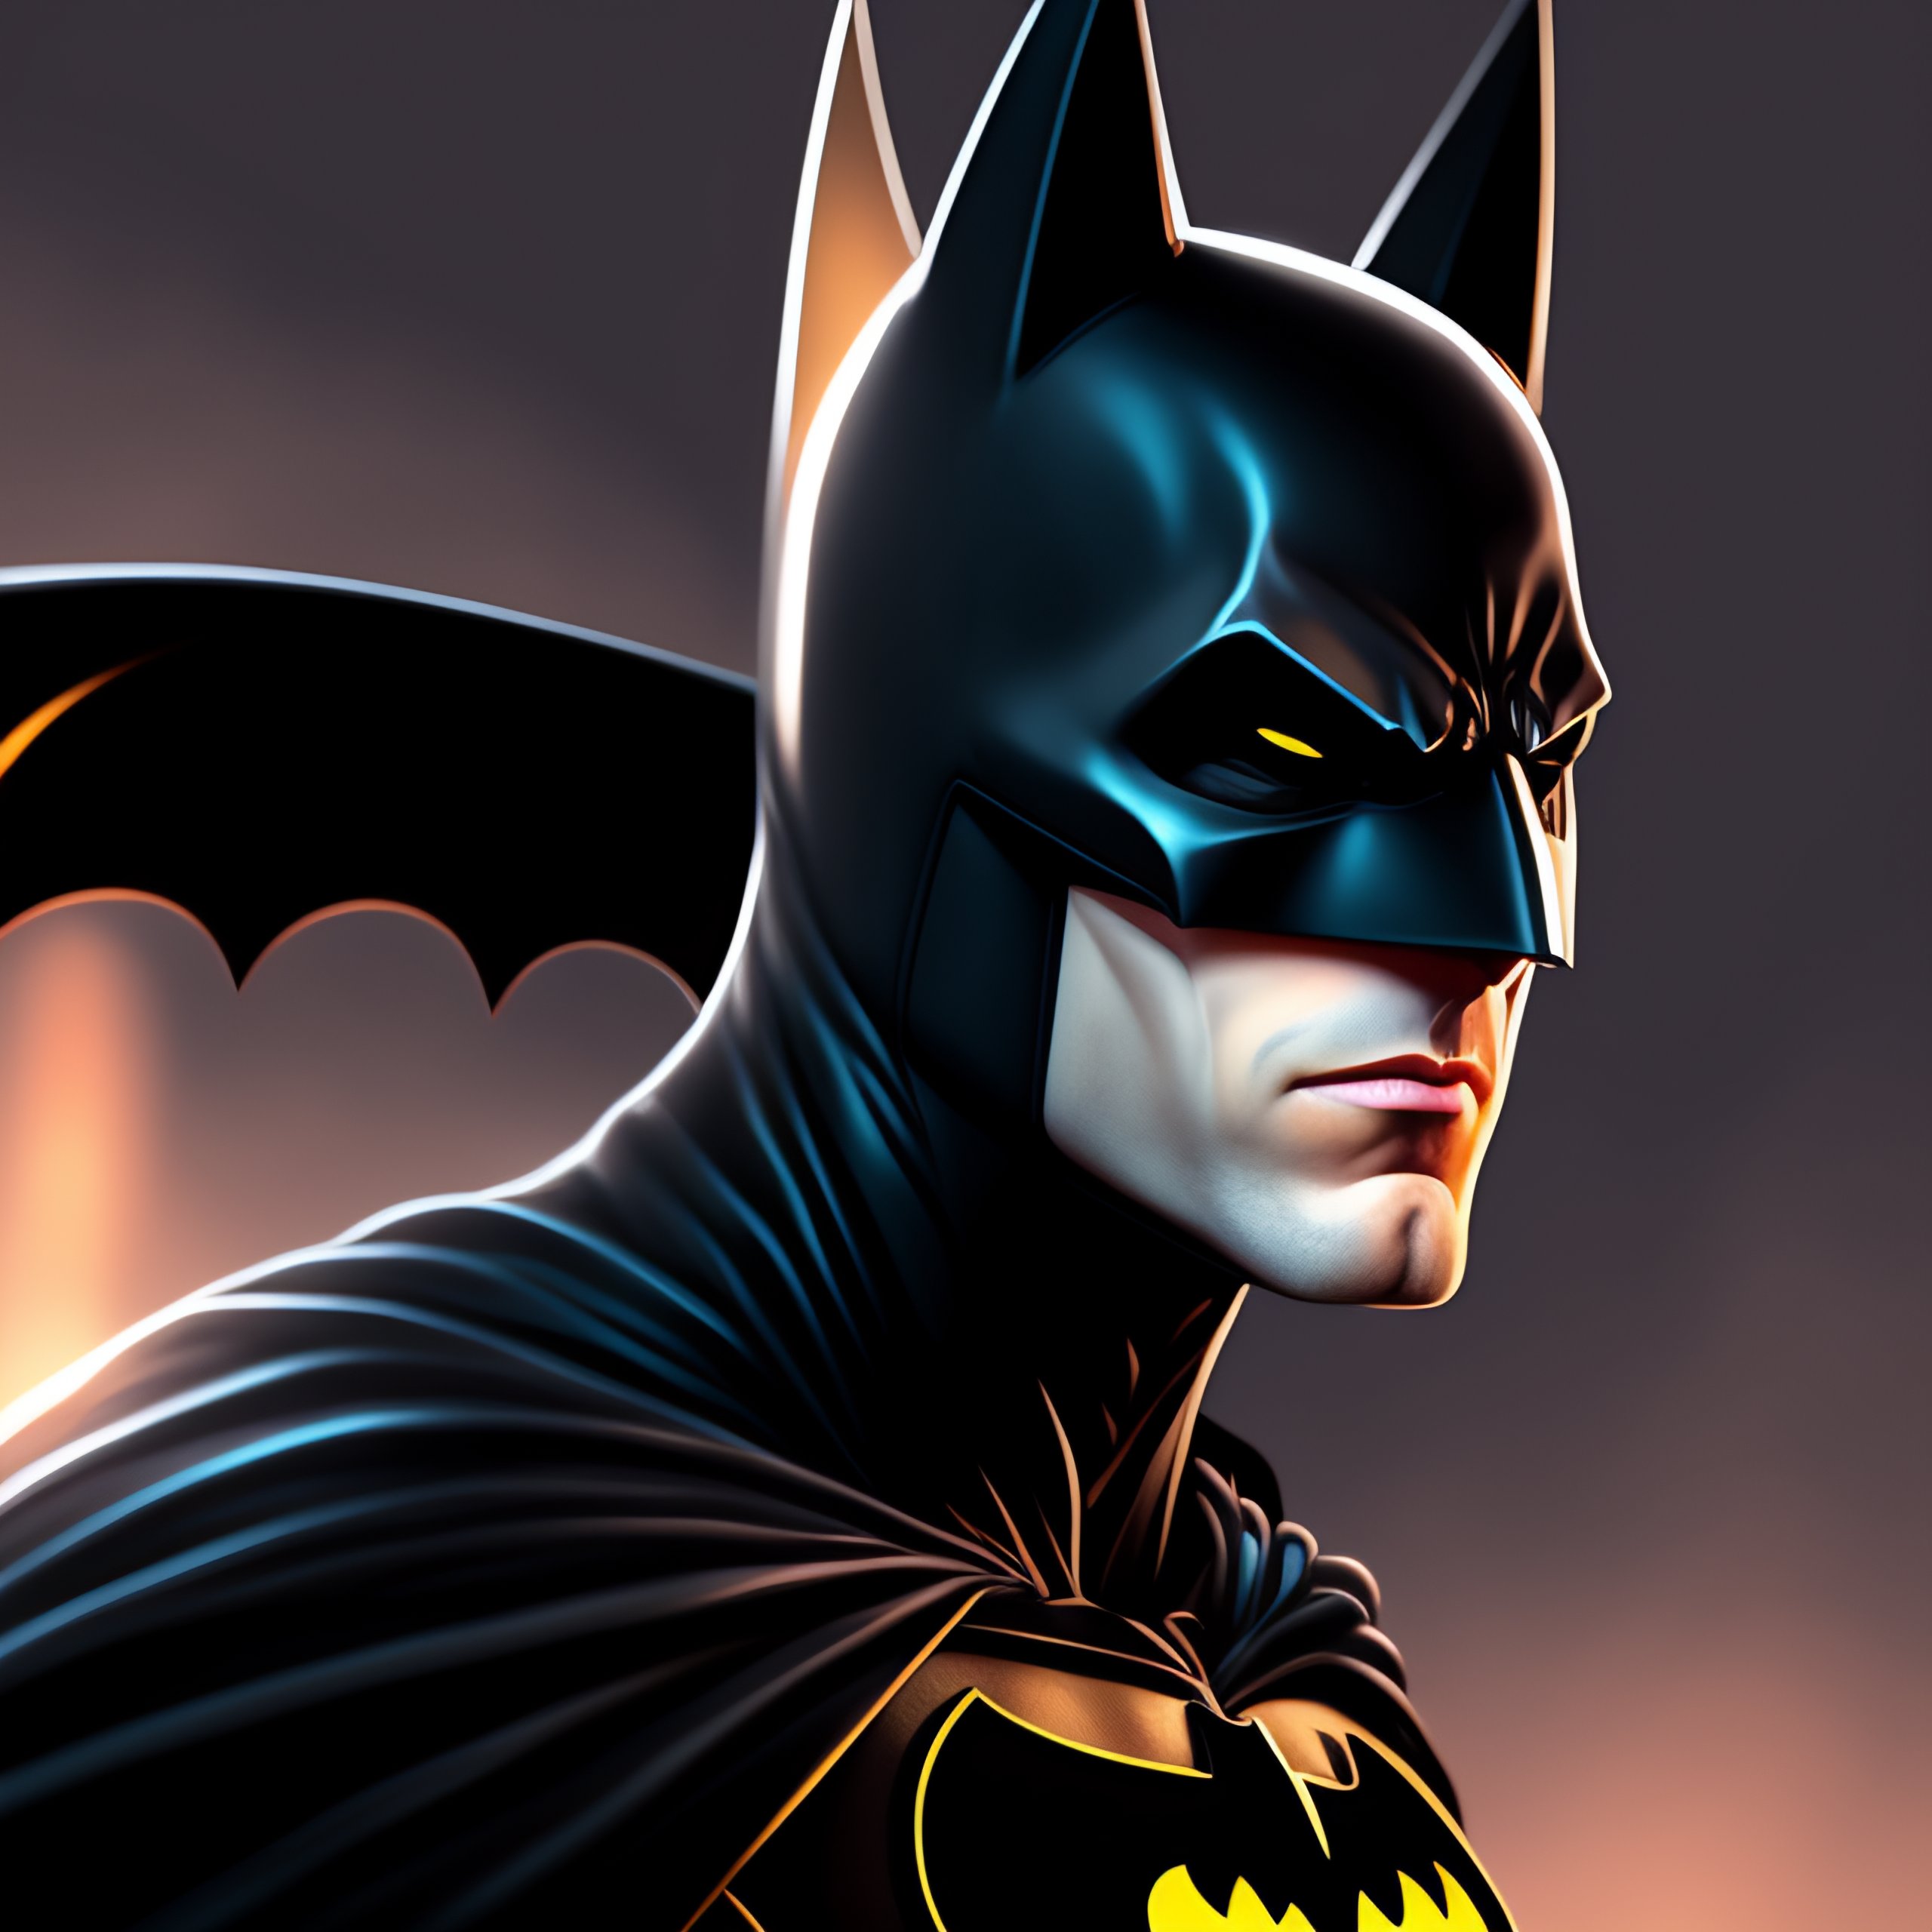 Lexica - Batman, 2d, cartoon, comic, handmade, digital art, full body